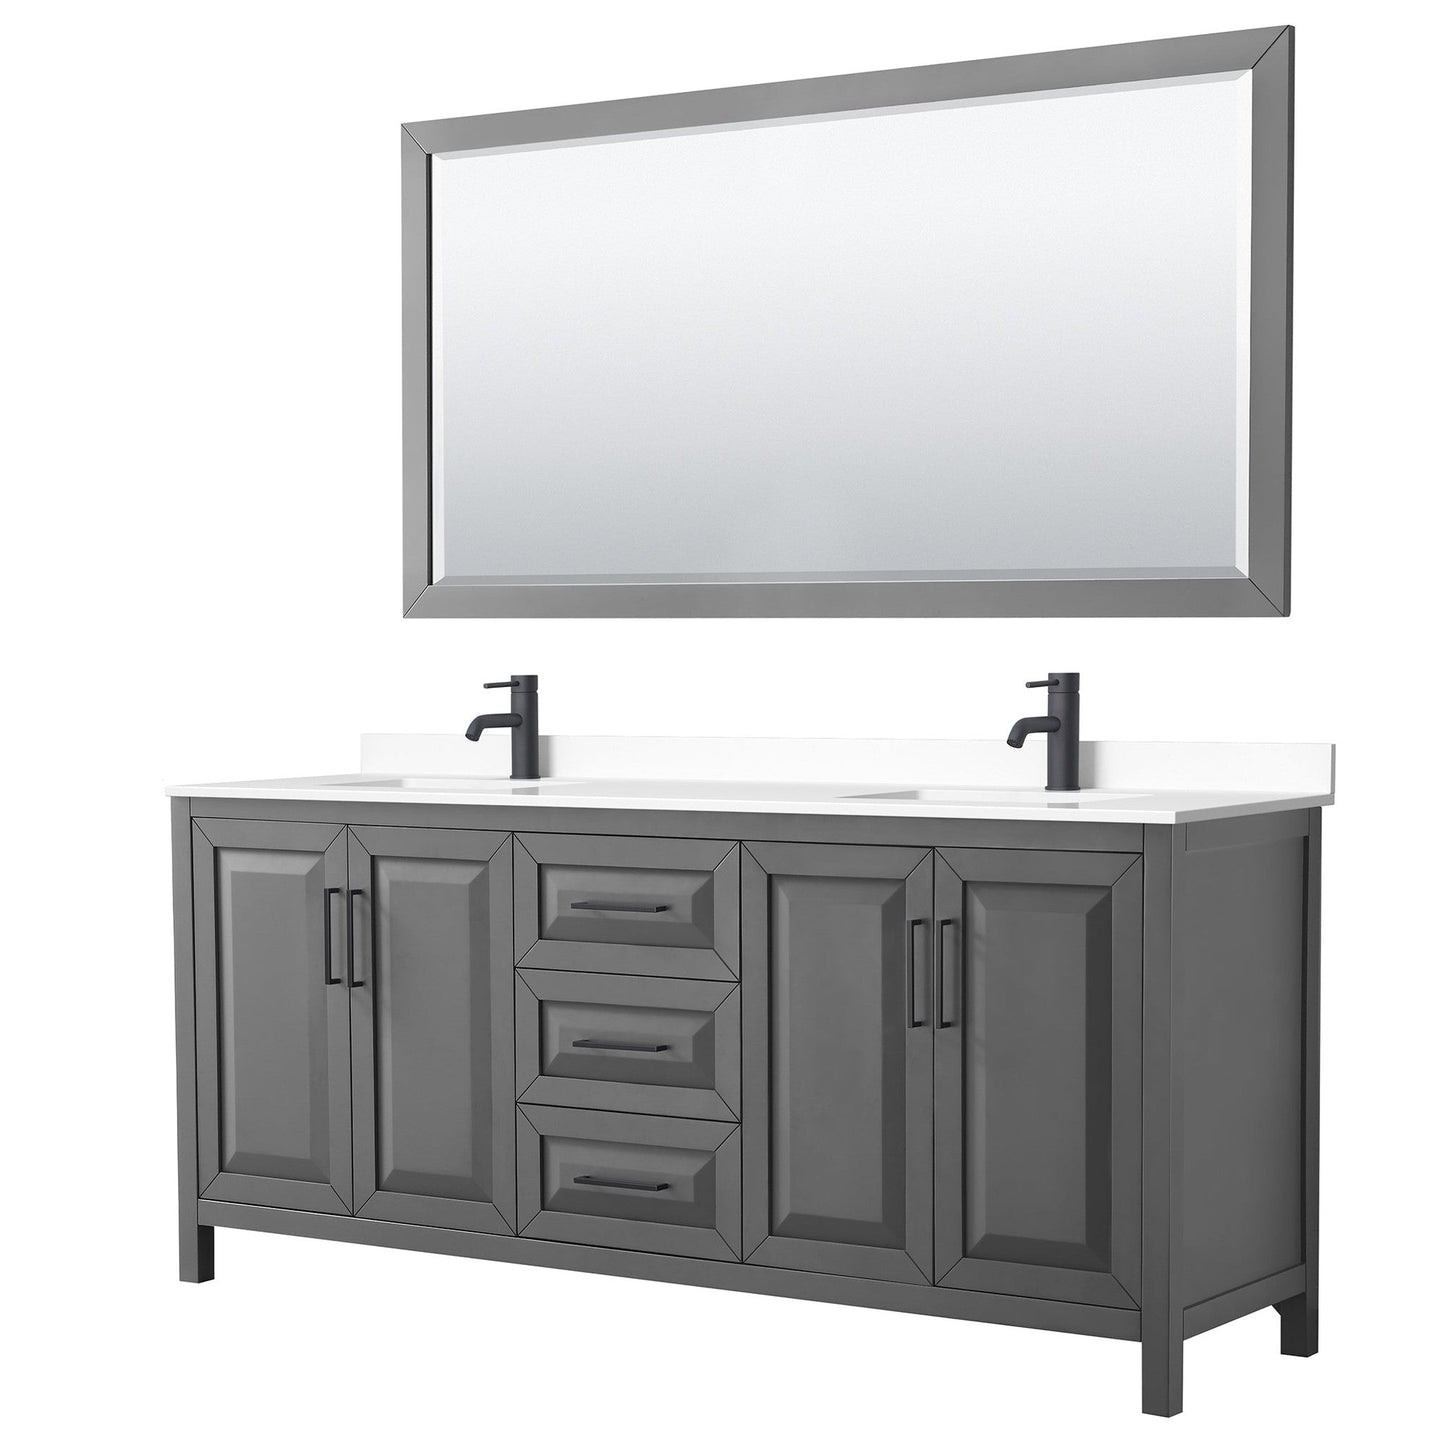 Daria 80" Double Bathroom Vanity in Dark Gray, White Cultured Marble Countertop, Undermount Square Sinks, Matte Black Trim, 70" Mirror